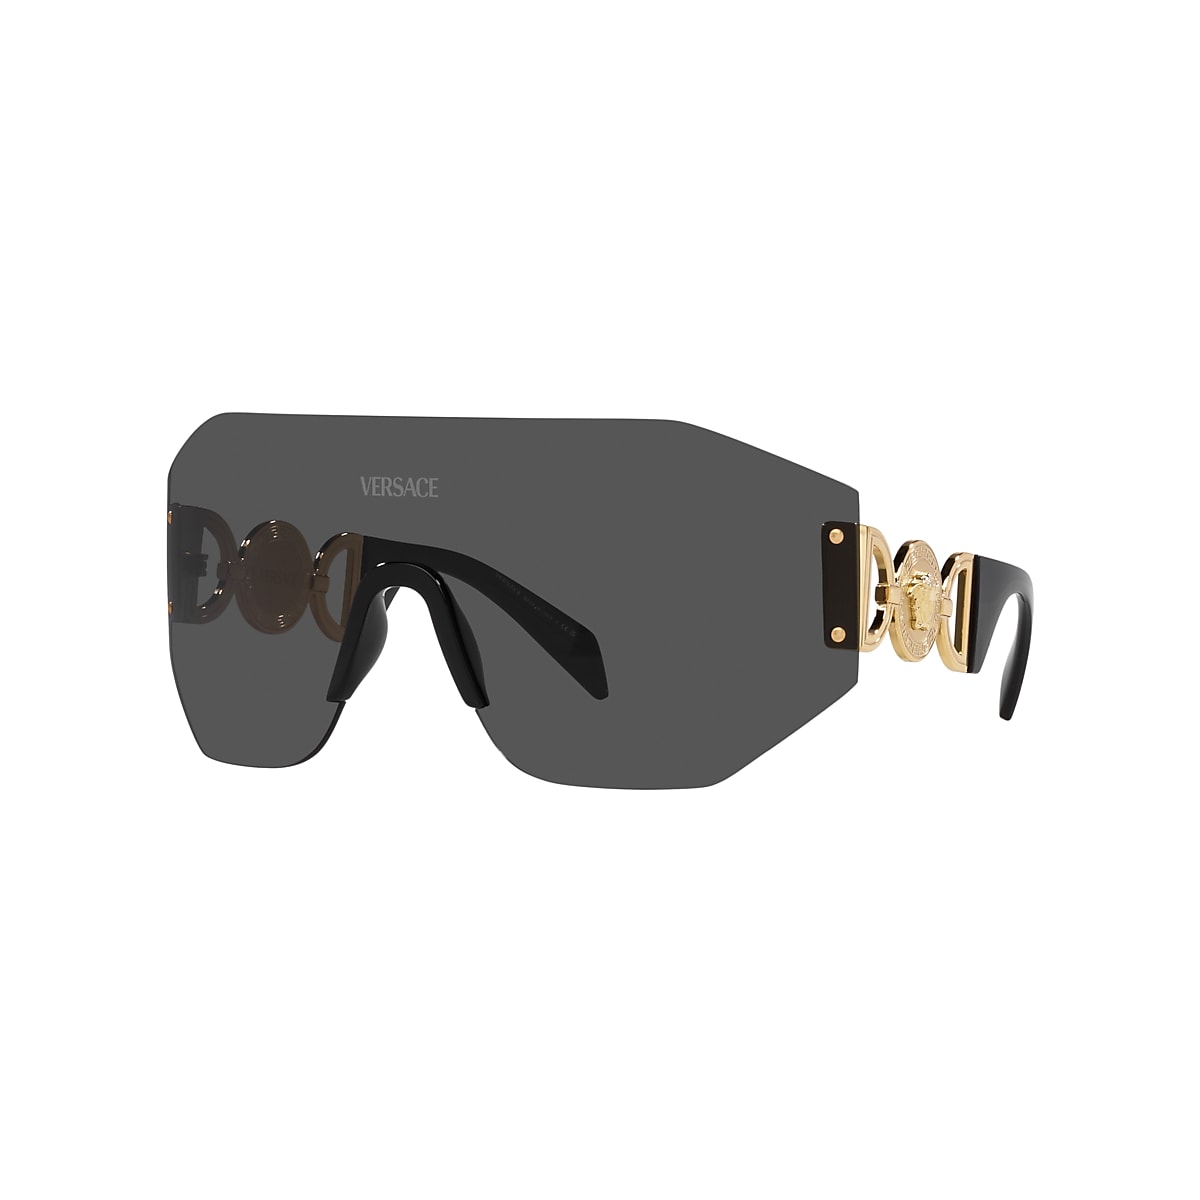 VERSACE VE2258 Dark Grey - Unisex Luxury Sunglasses, Dark Grey Lens